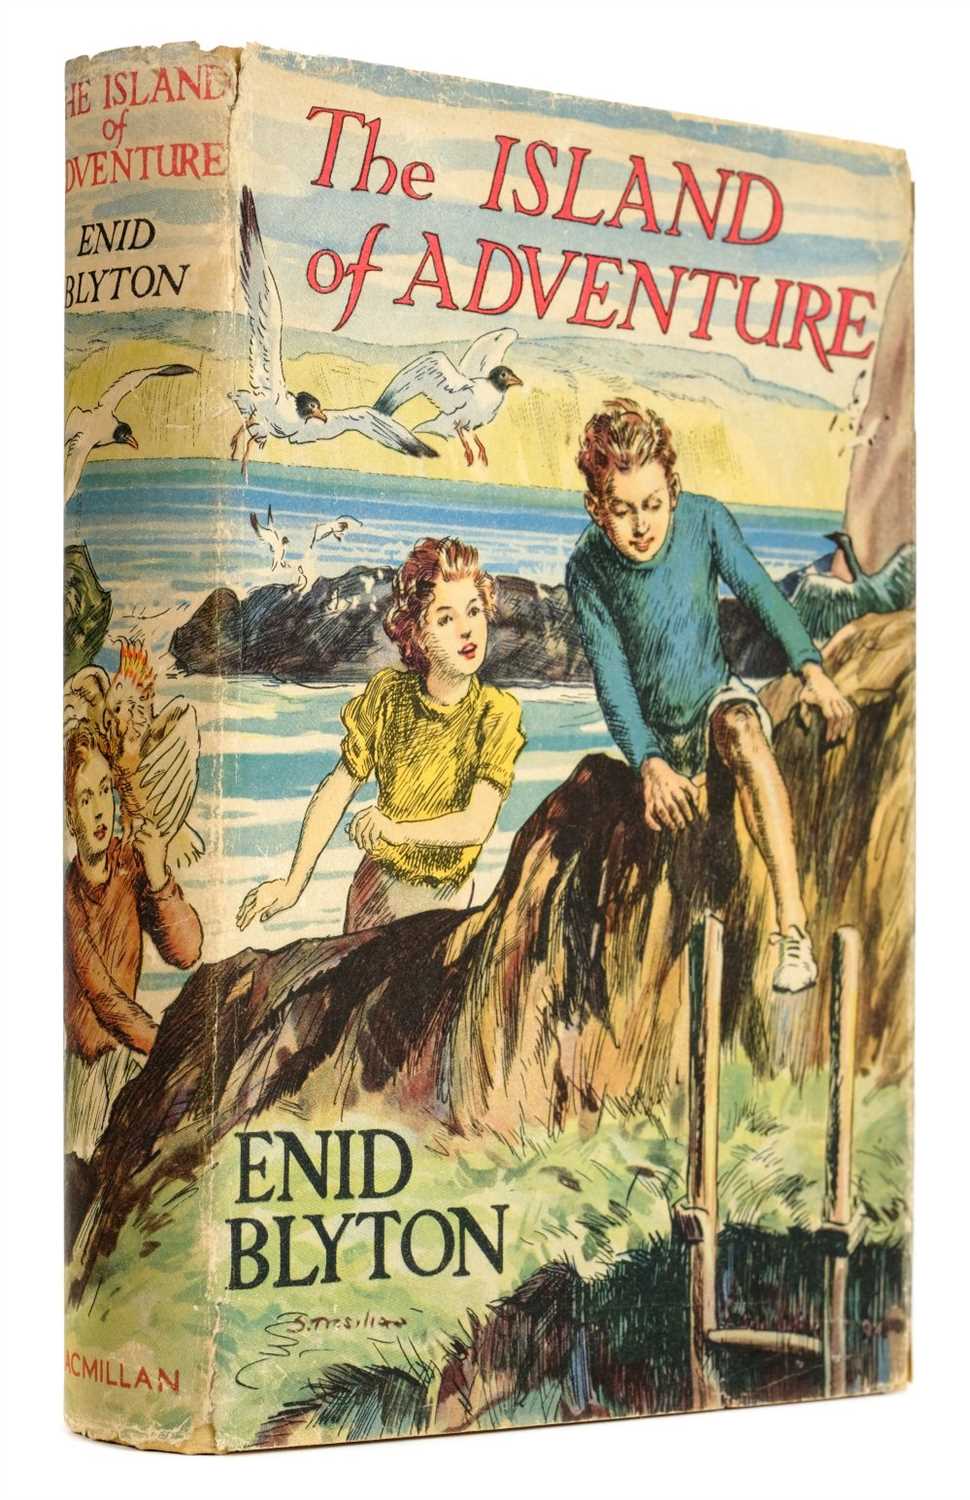 Lot 532 - Blyton (Enid). The Island of Adventure, first edition, Macmillan & Co., 1944